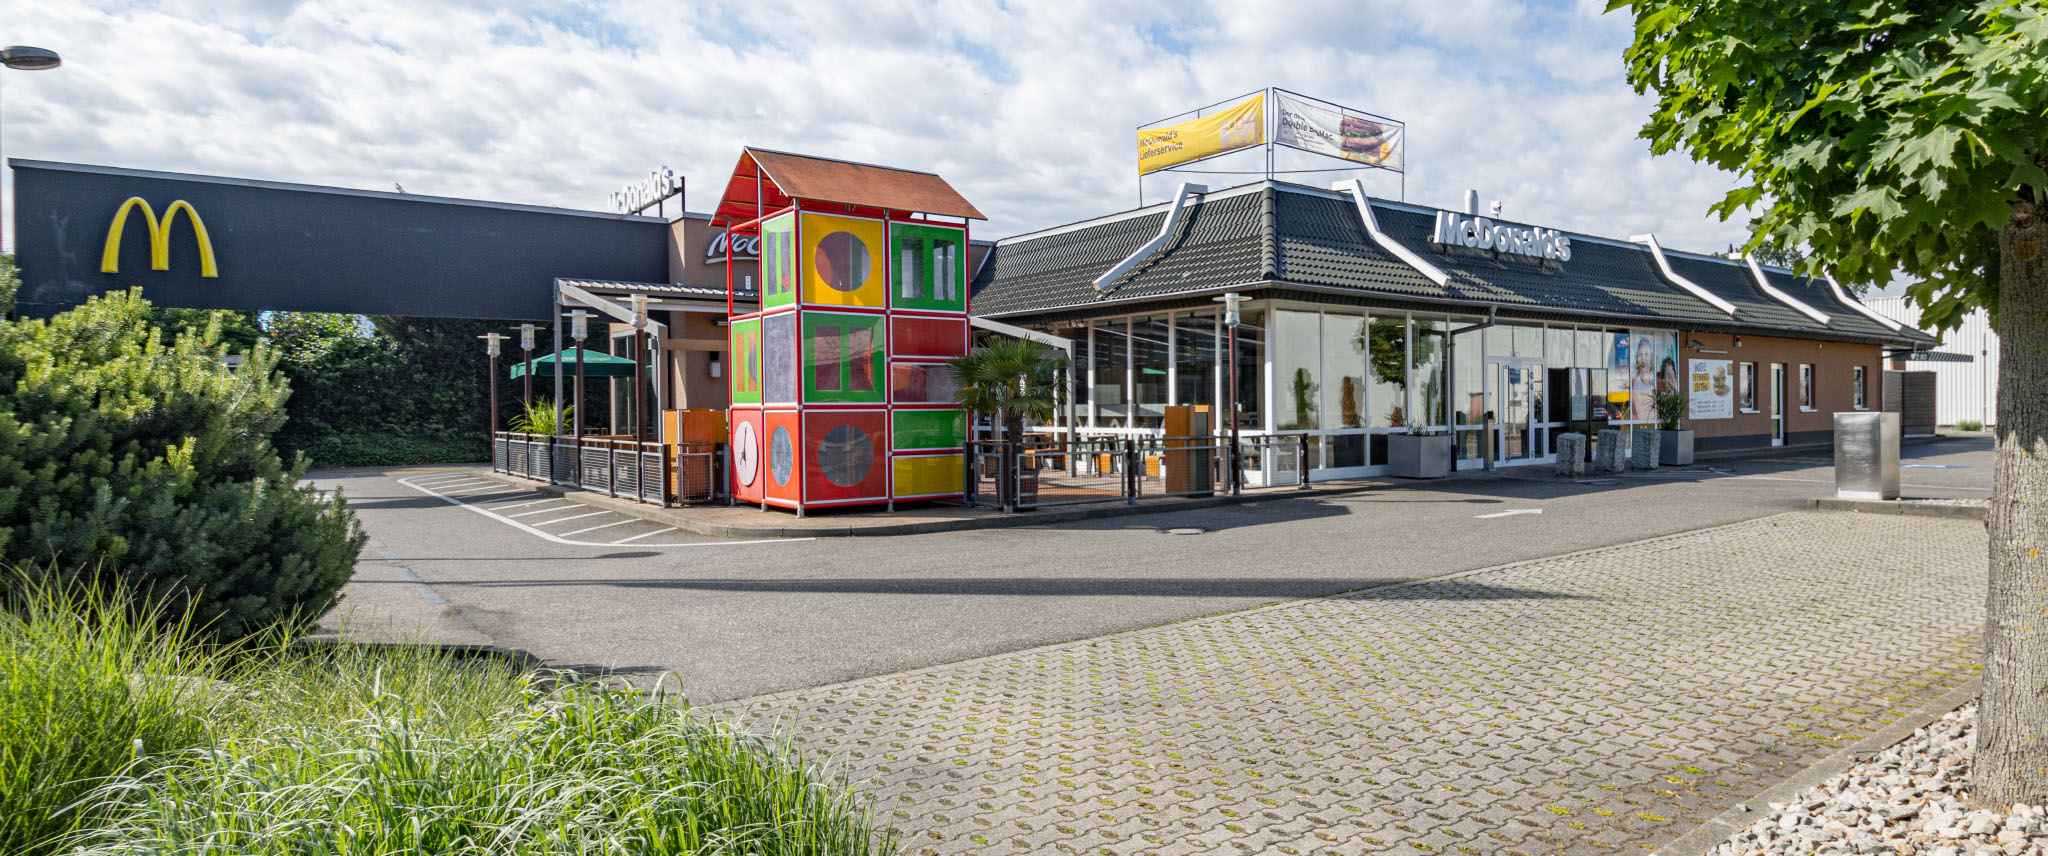 Das McDonald’s-Restaurant in Freiburg im Breisgau (Tullastraße)